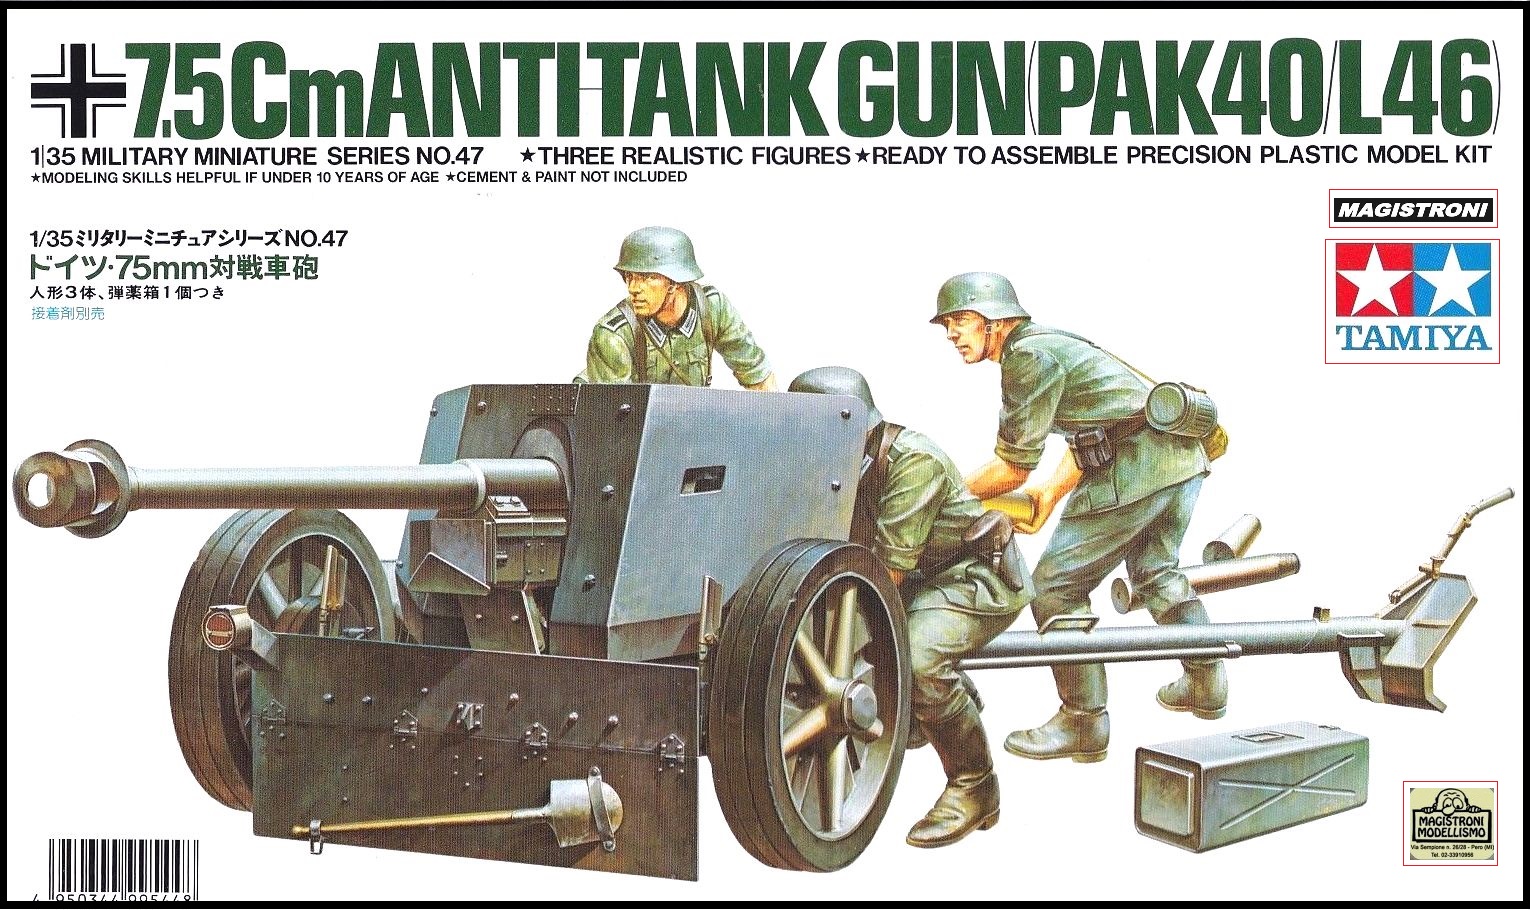 7,5cm ANTITANK GUN (PAK40/L46)